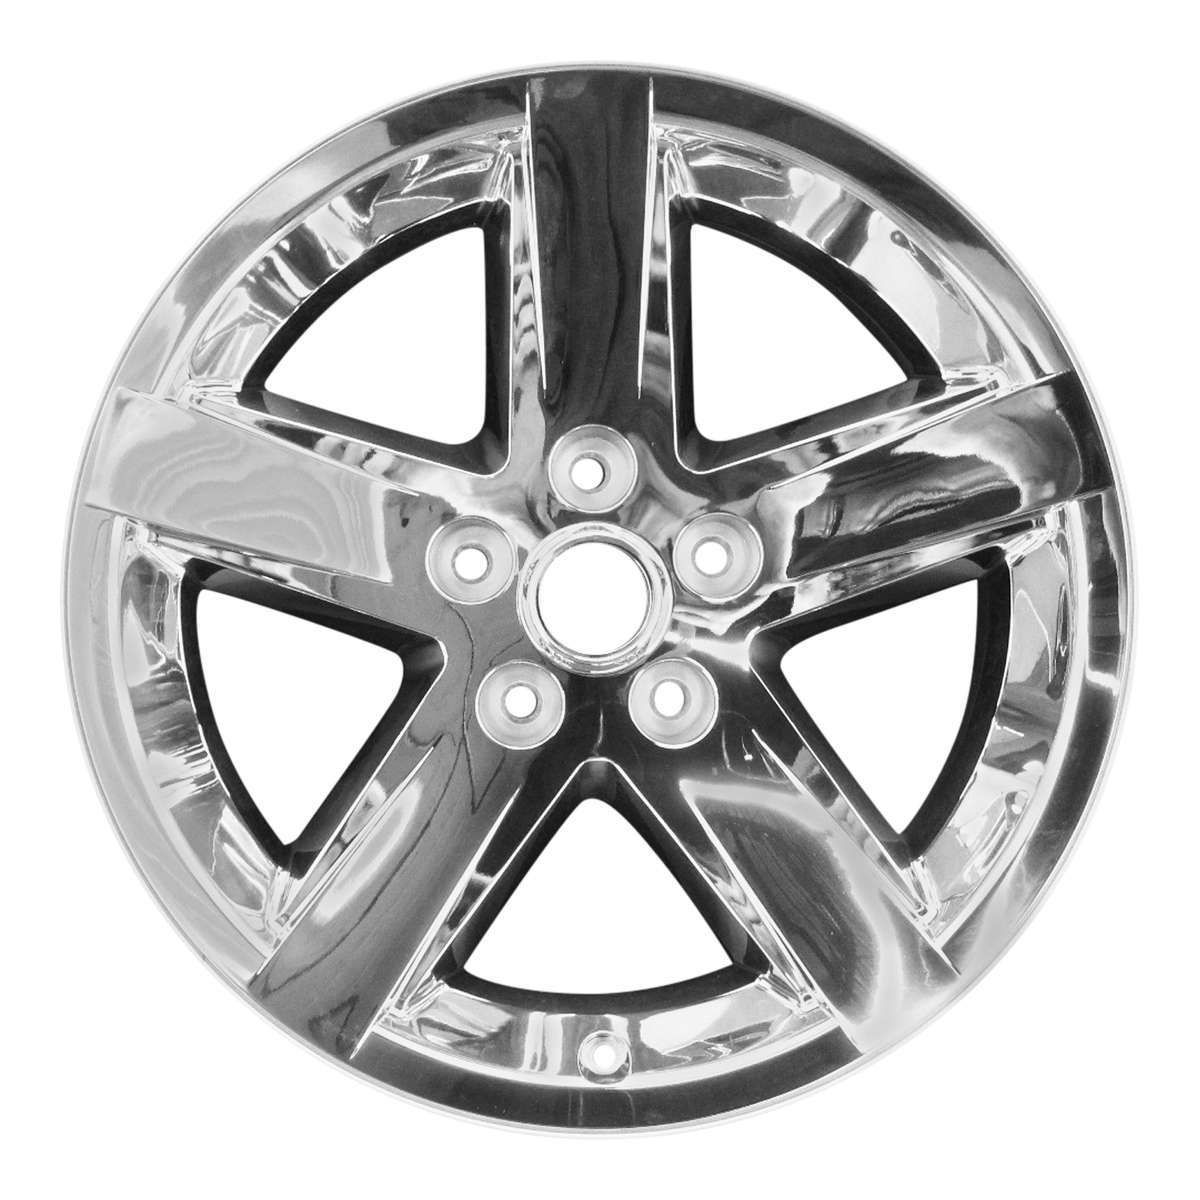 2015 Dodge RAM 1500 New 20" Replacement Wheel Rim RW2364XCCLAD